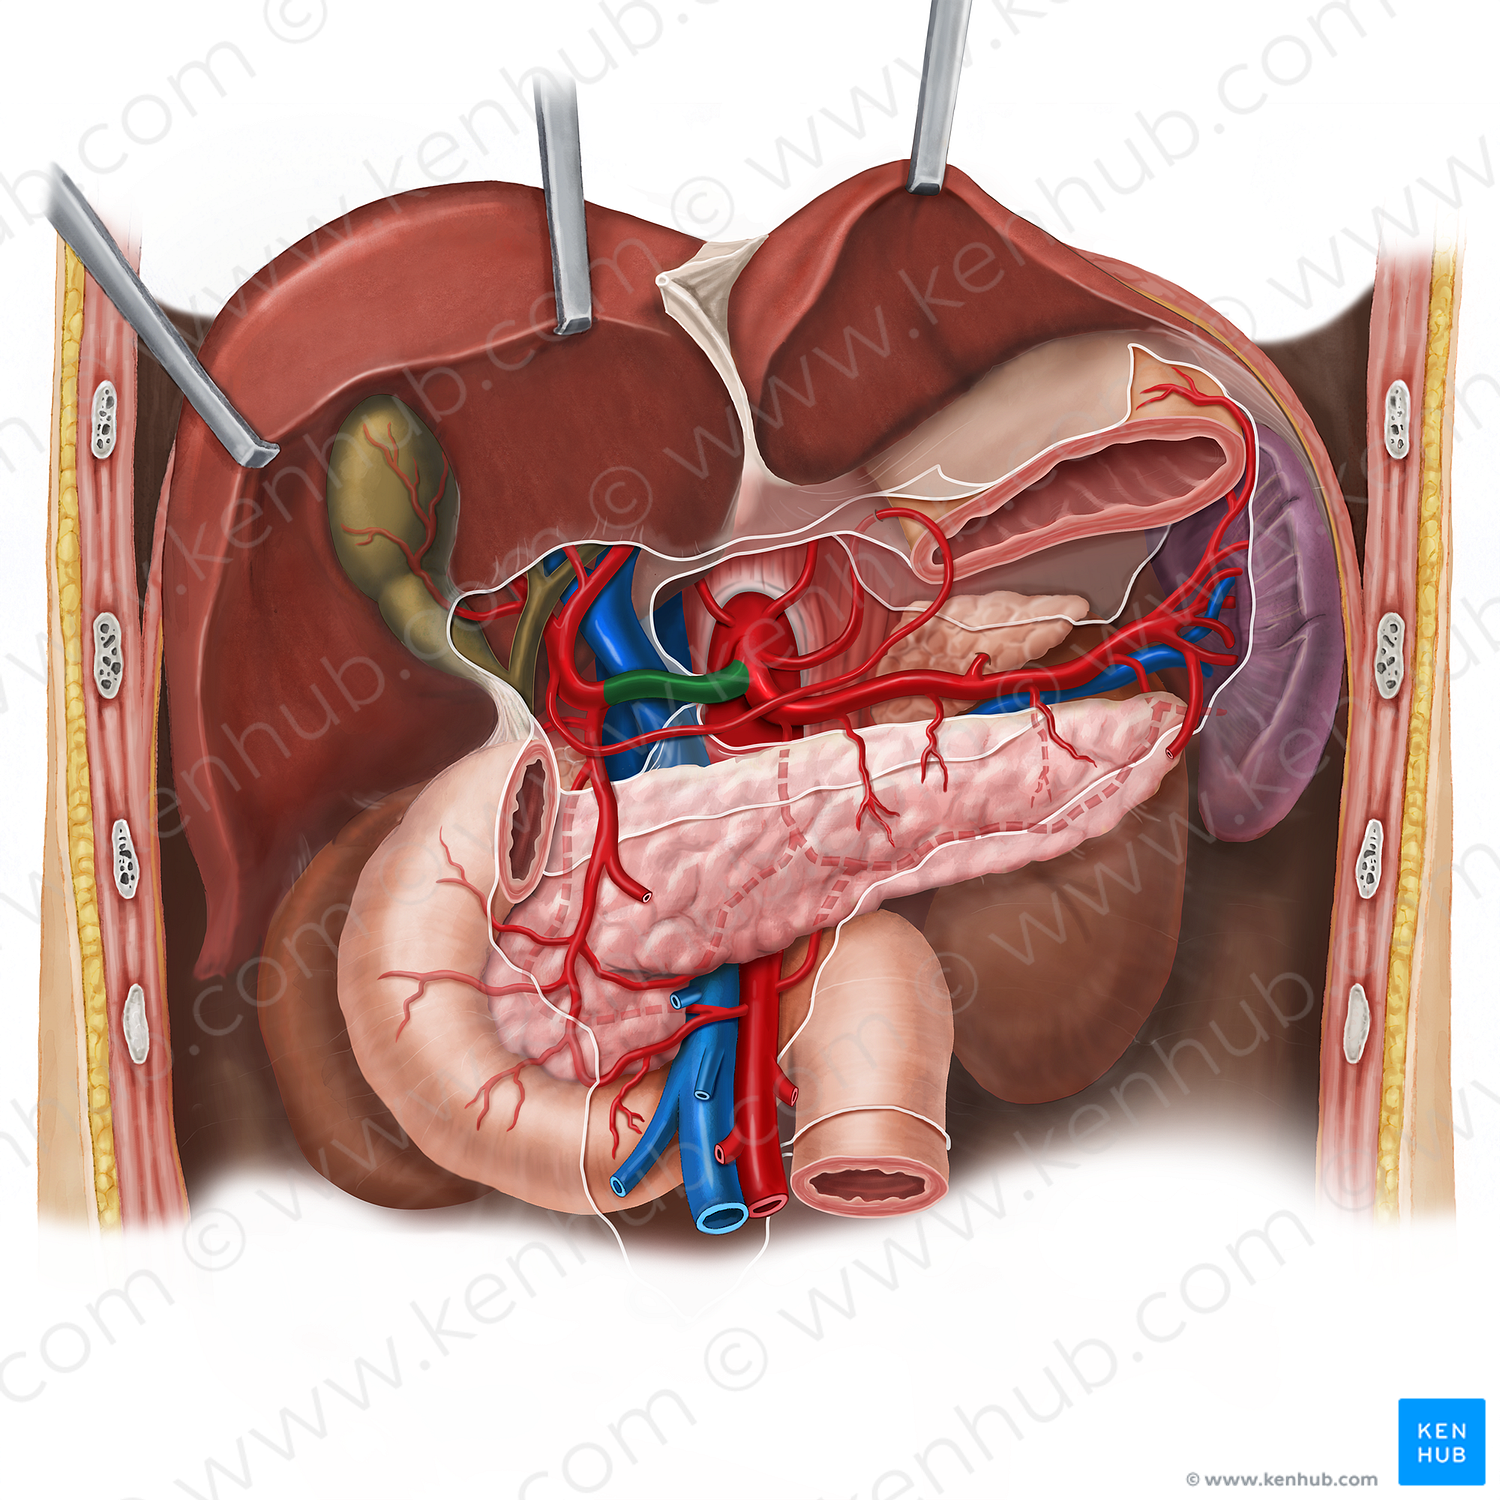 Common hepatic artery (#1331)